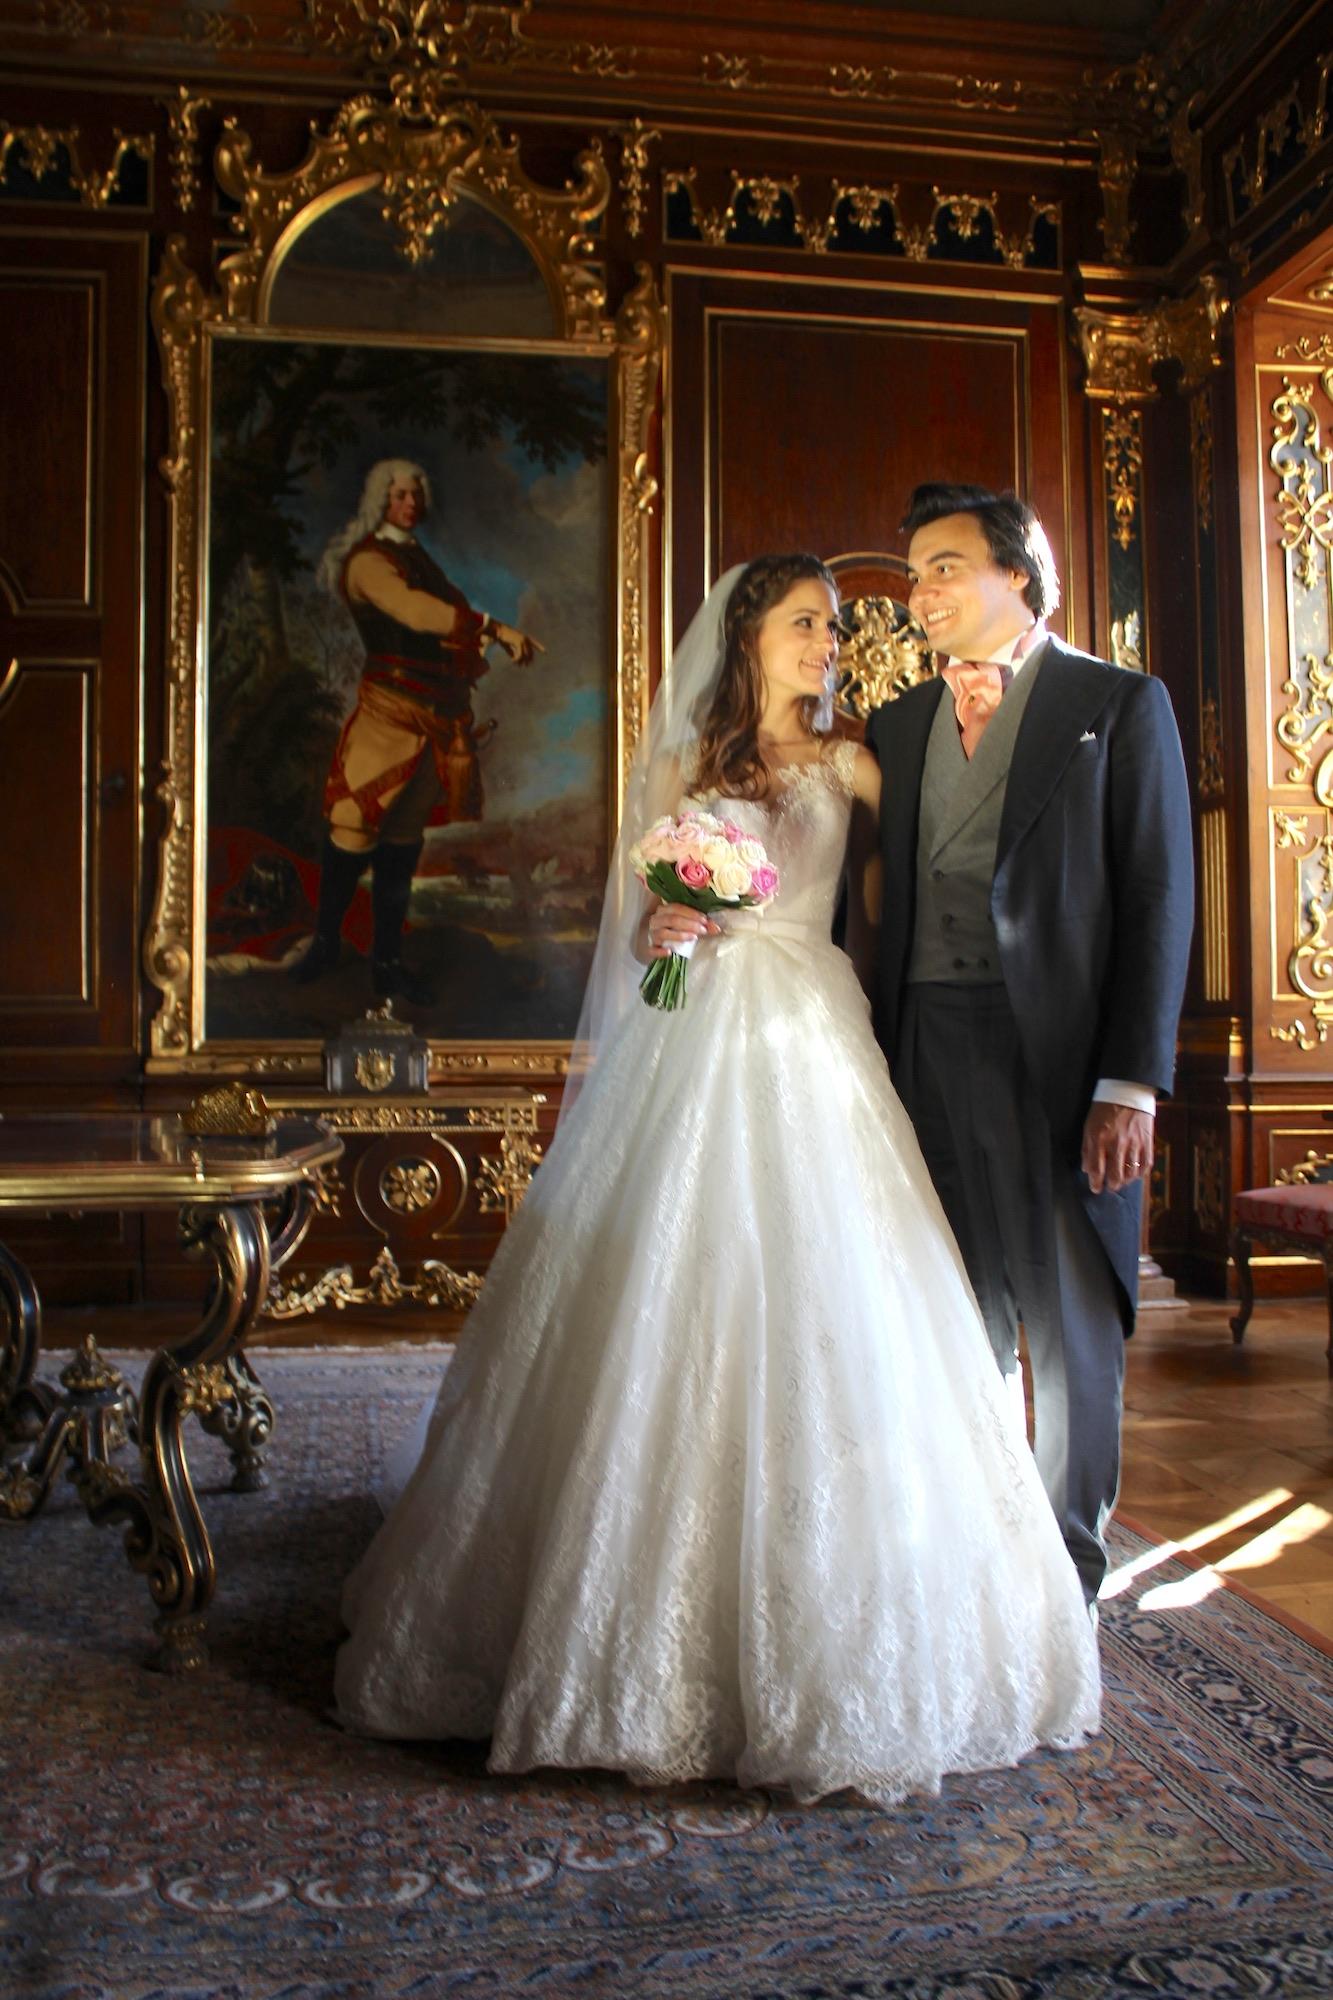 Valtice and Lednice Castle interiors provide spectacular backdrops for wedding photos. – © Lenka Beránková